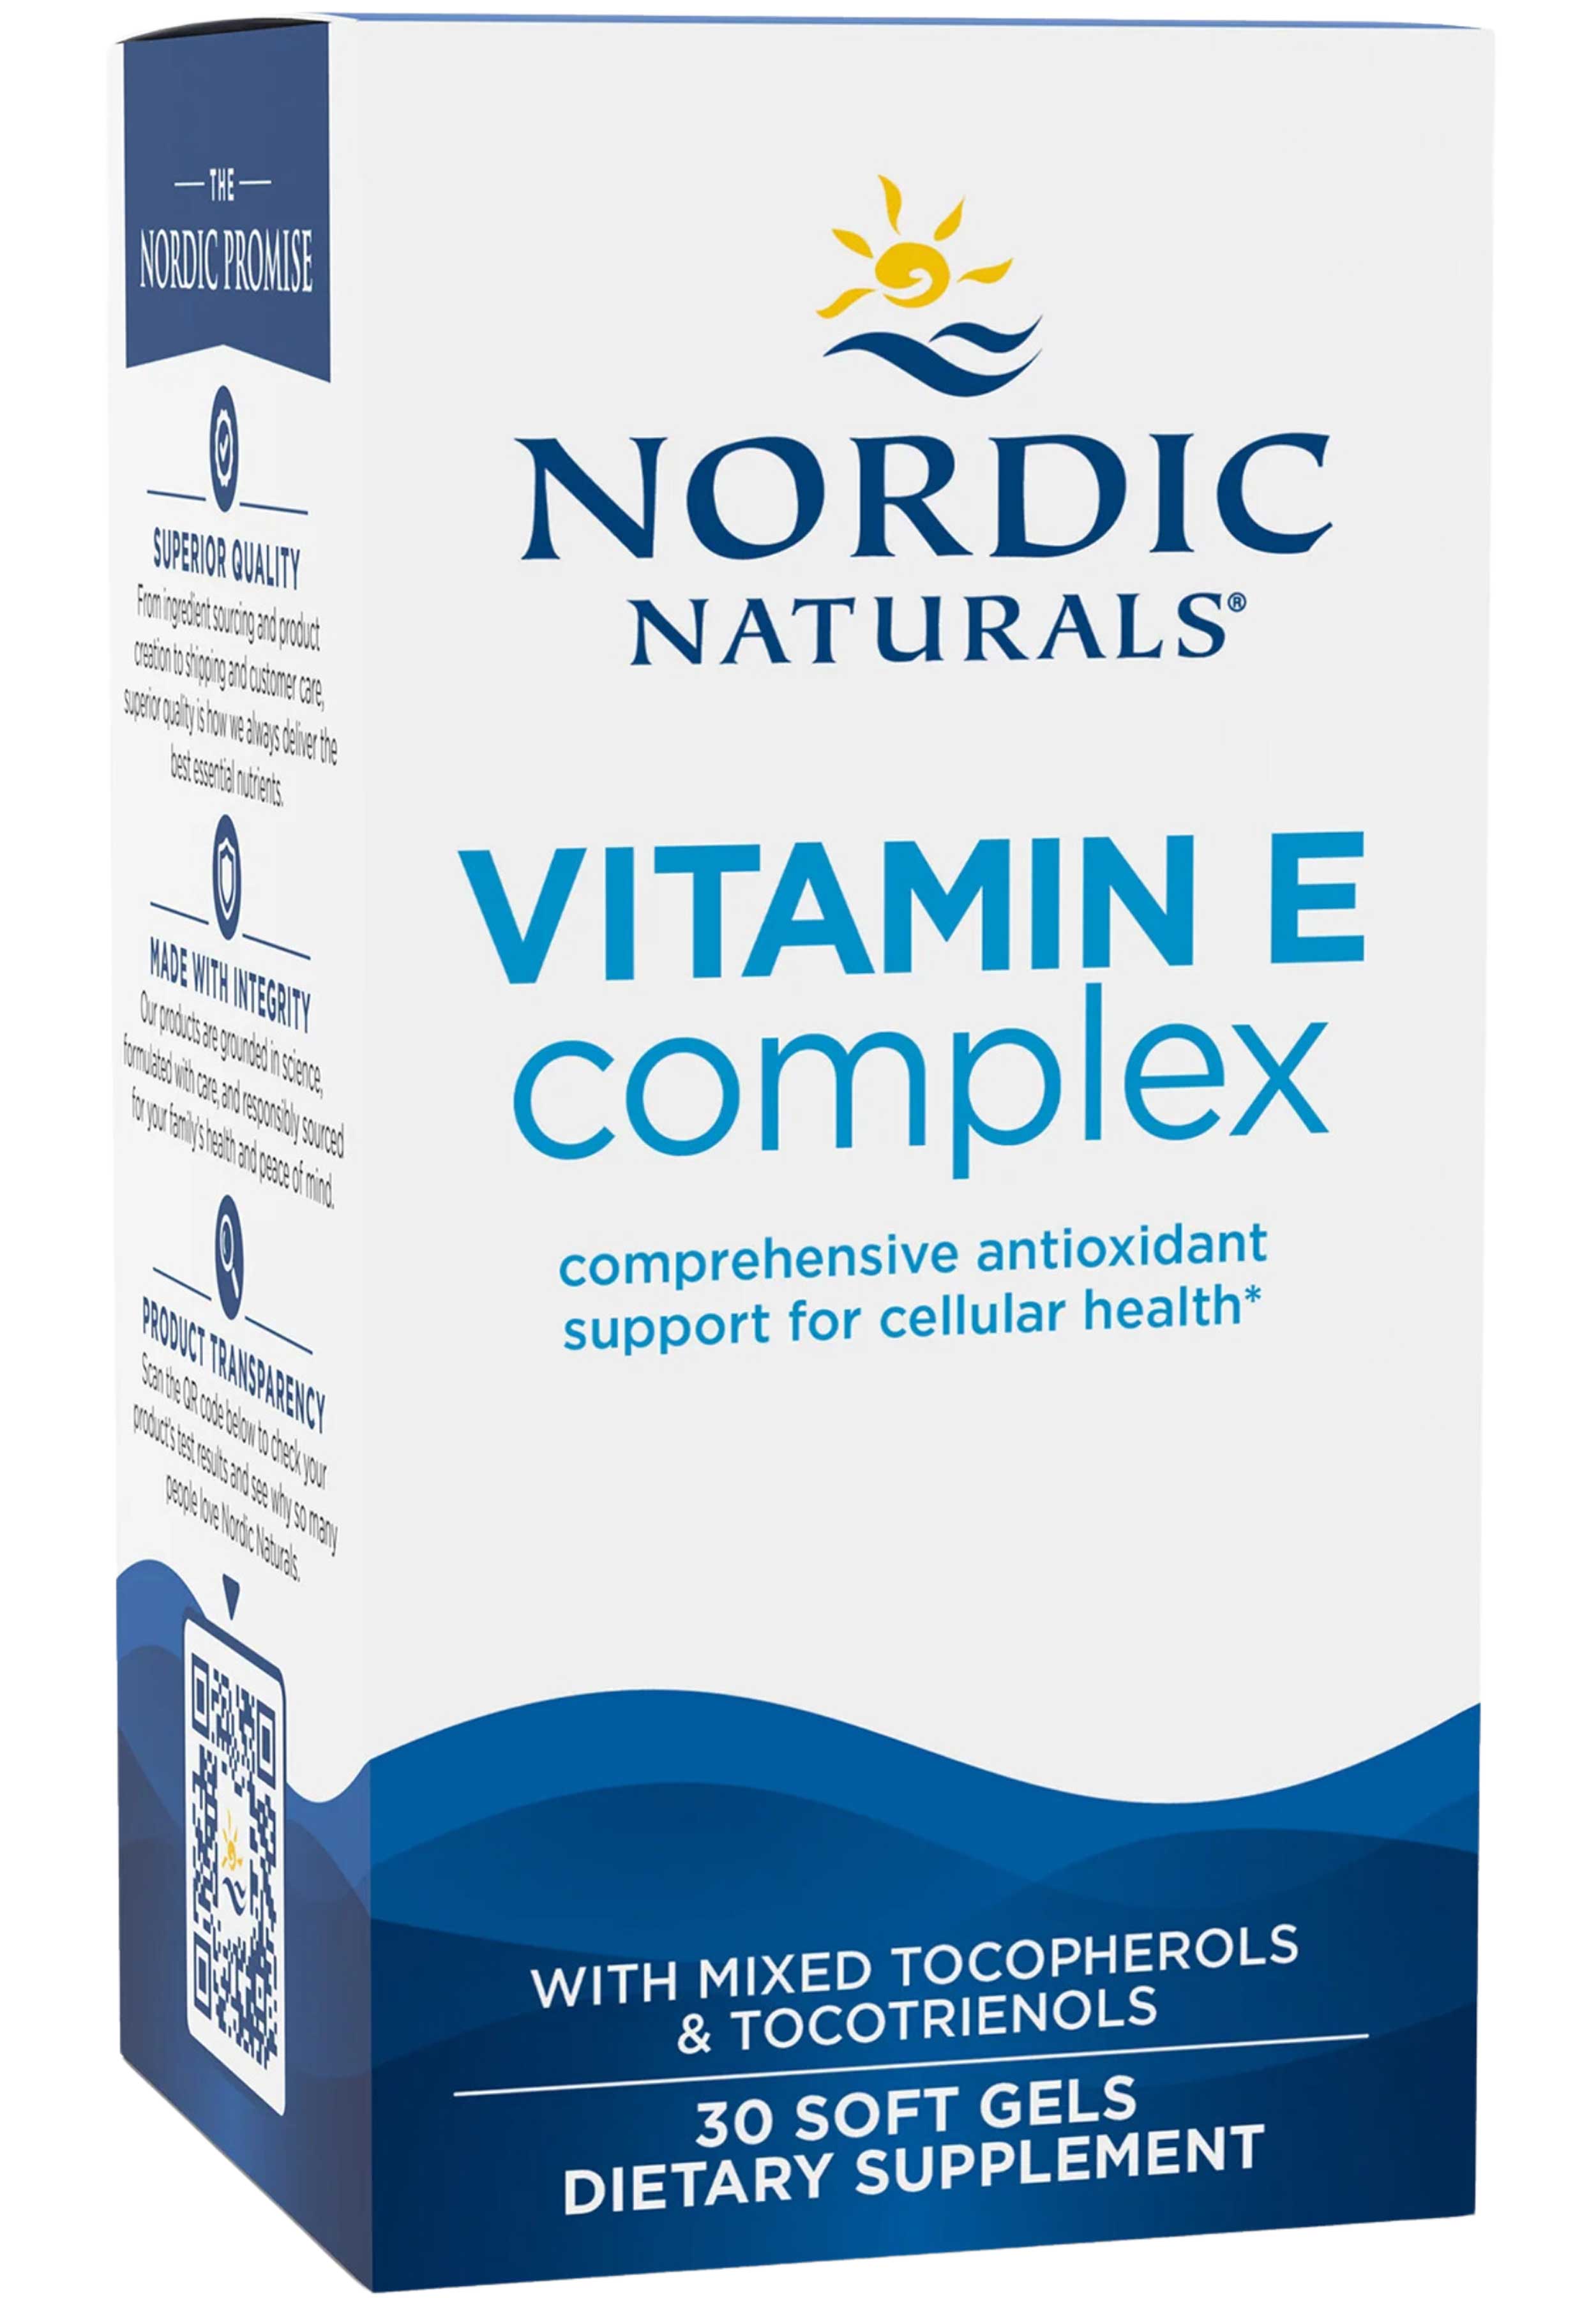 Nordic Naturals Vitamin E Complex